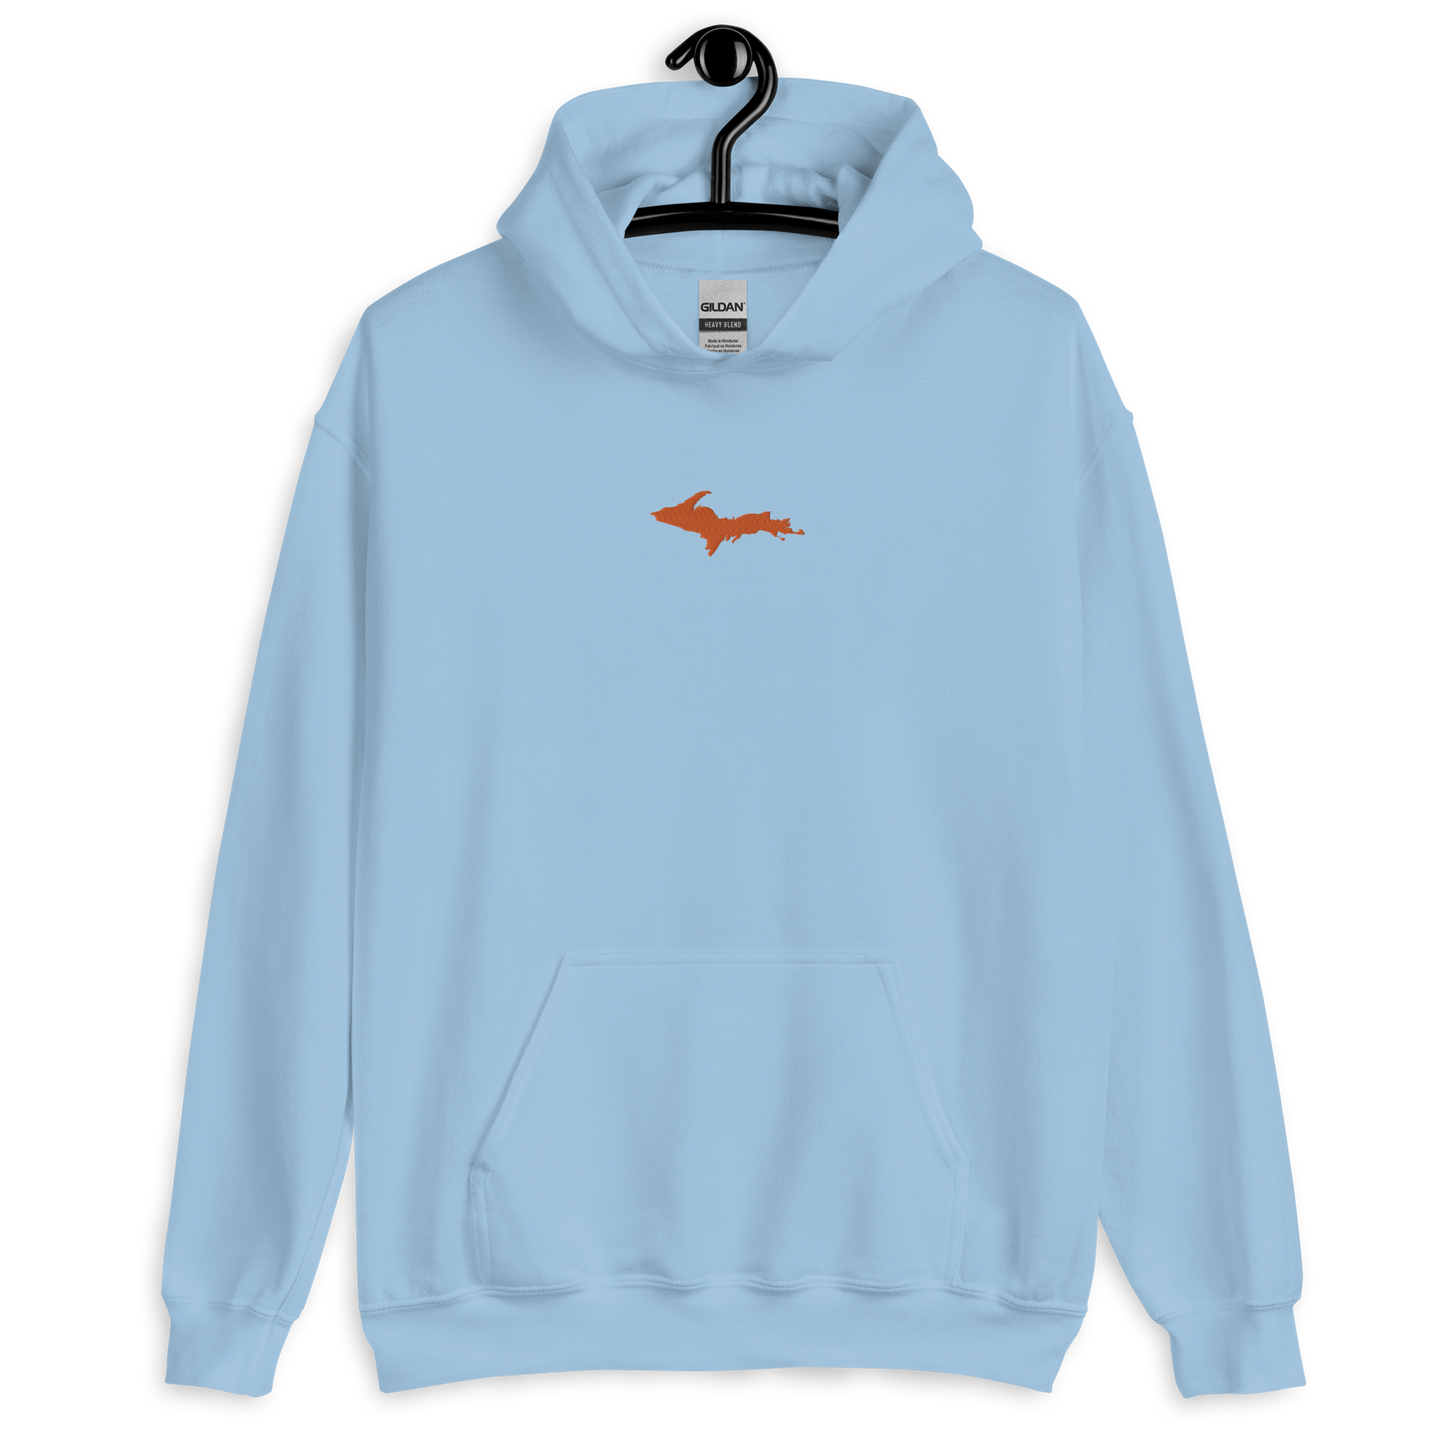 Michigan Upper Peninsula Hoodie (w/ Embroidered Orange UP Outline) | Unisex Standard